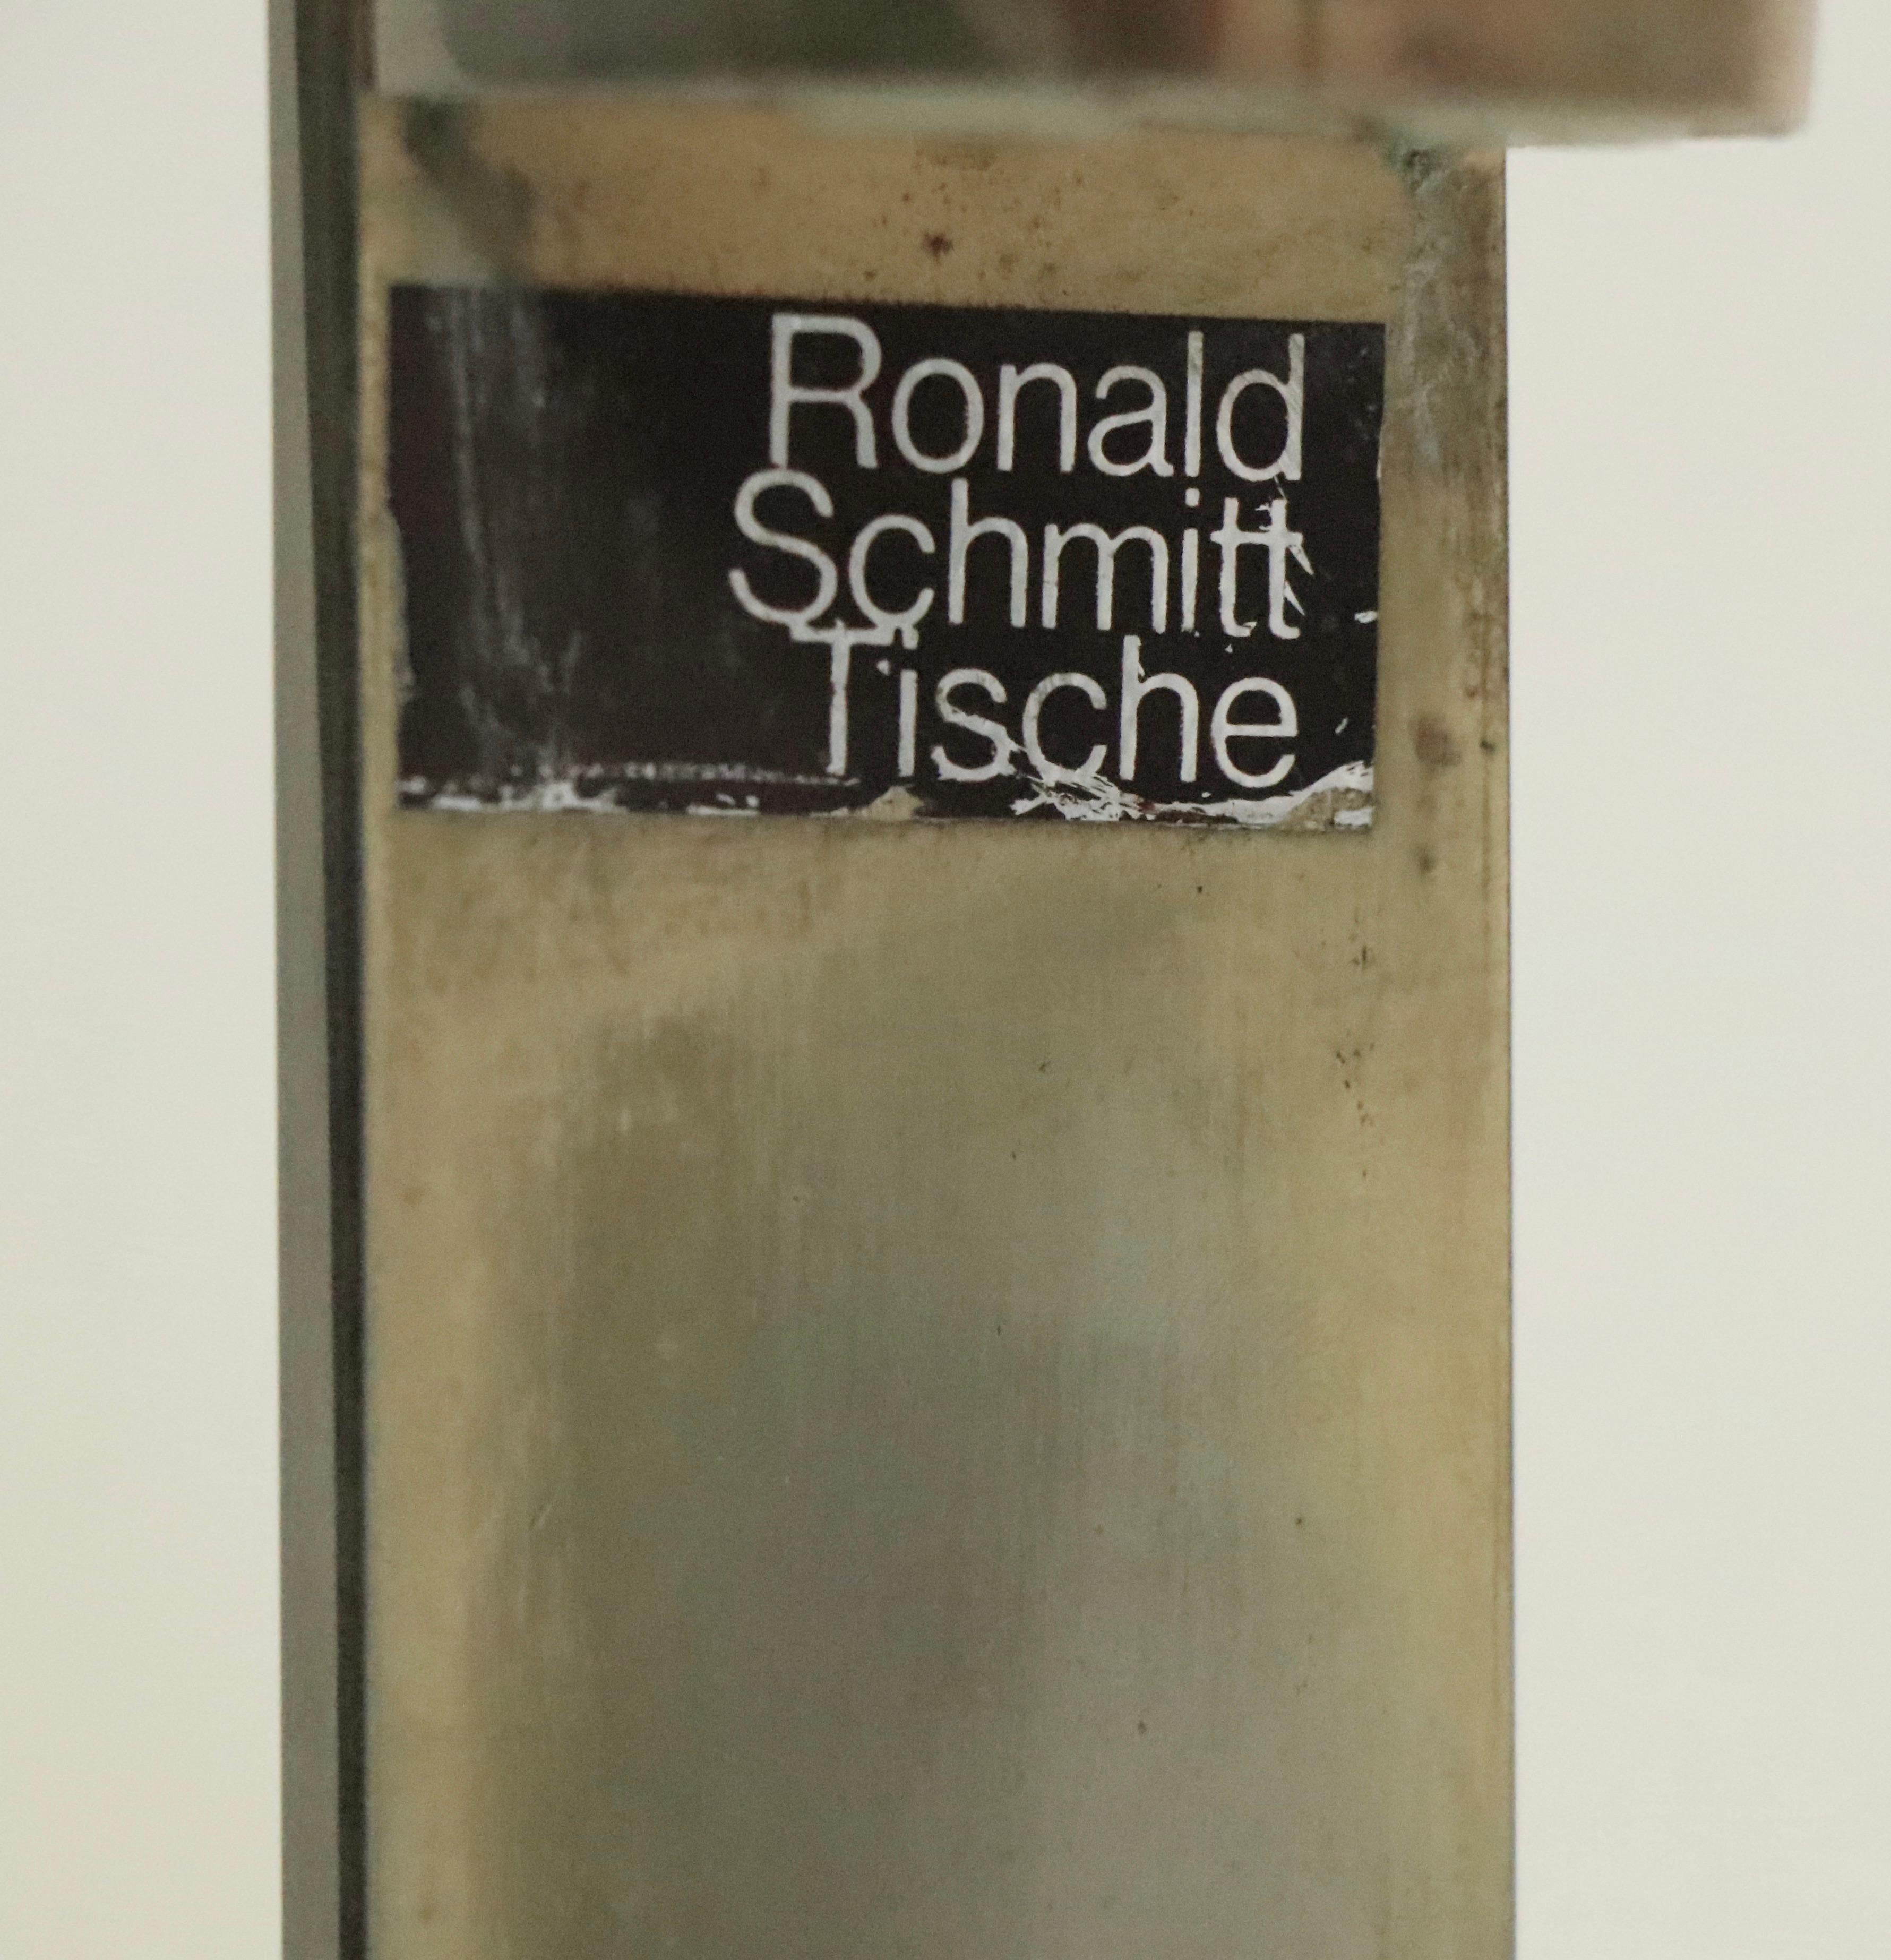 Acier inoxydable Tables gigognes en acier et verre de Friedrich Moller pour Ronald Schmitt Tische en vente